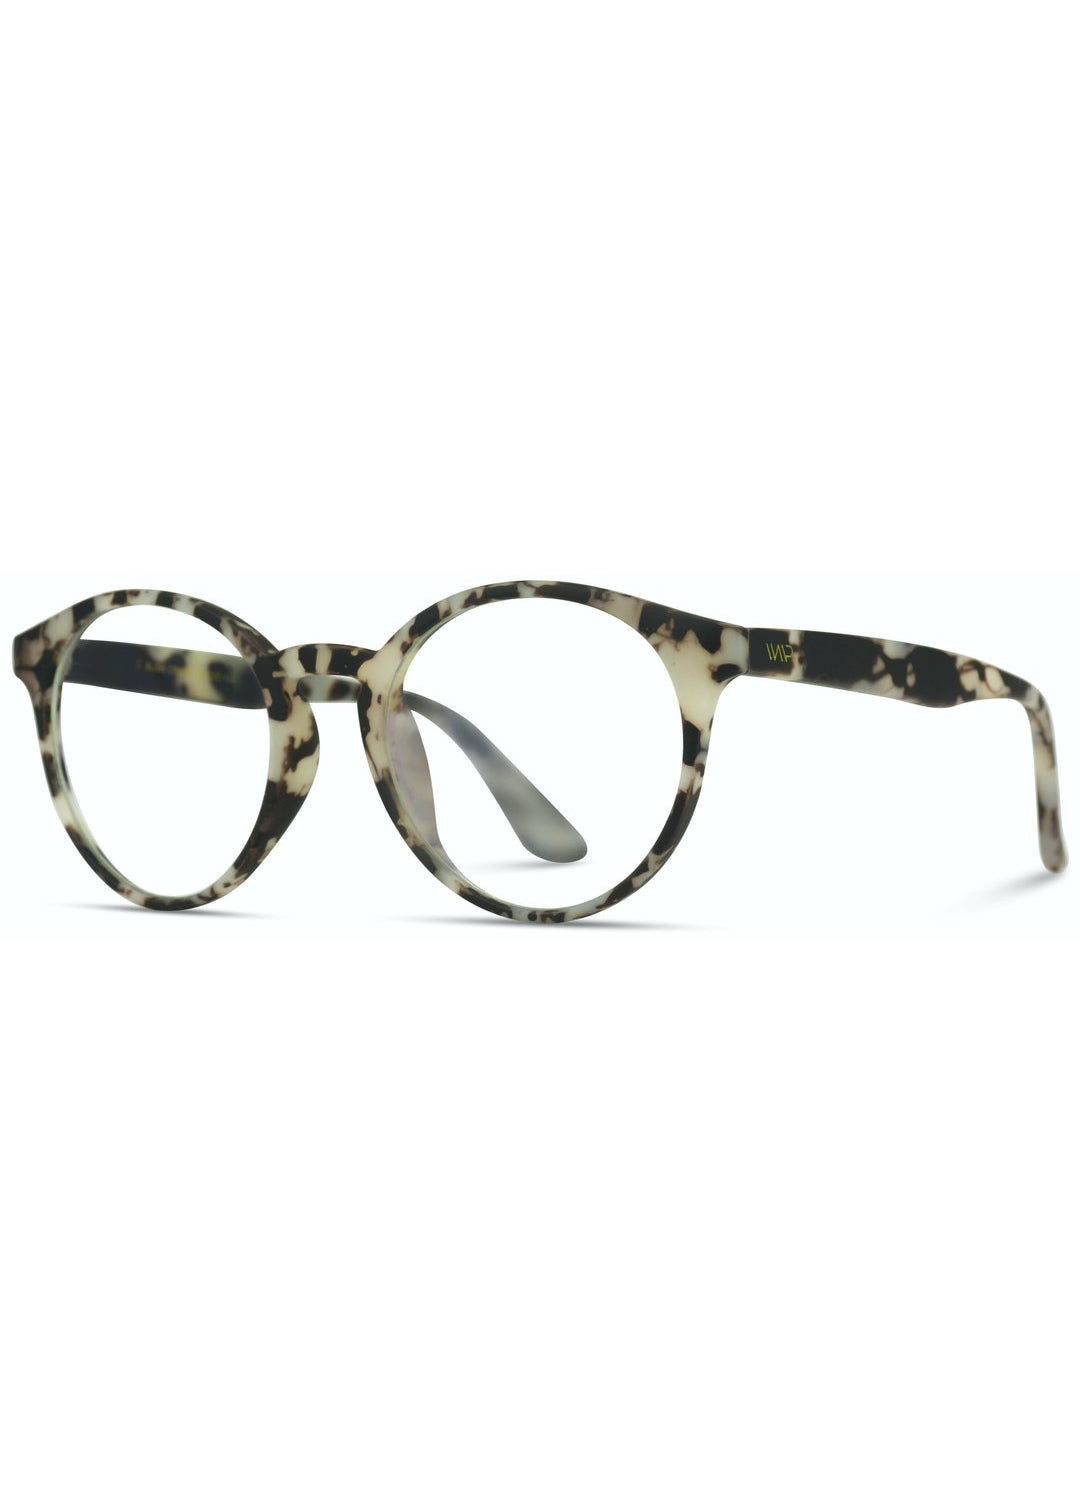 Cream Tortoise Retro Blue Light Glasses - FINAL SALE Accessories